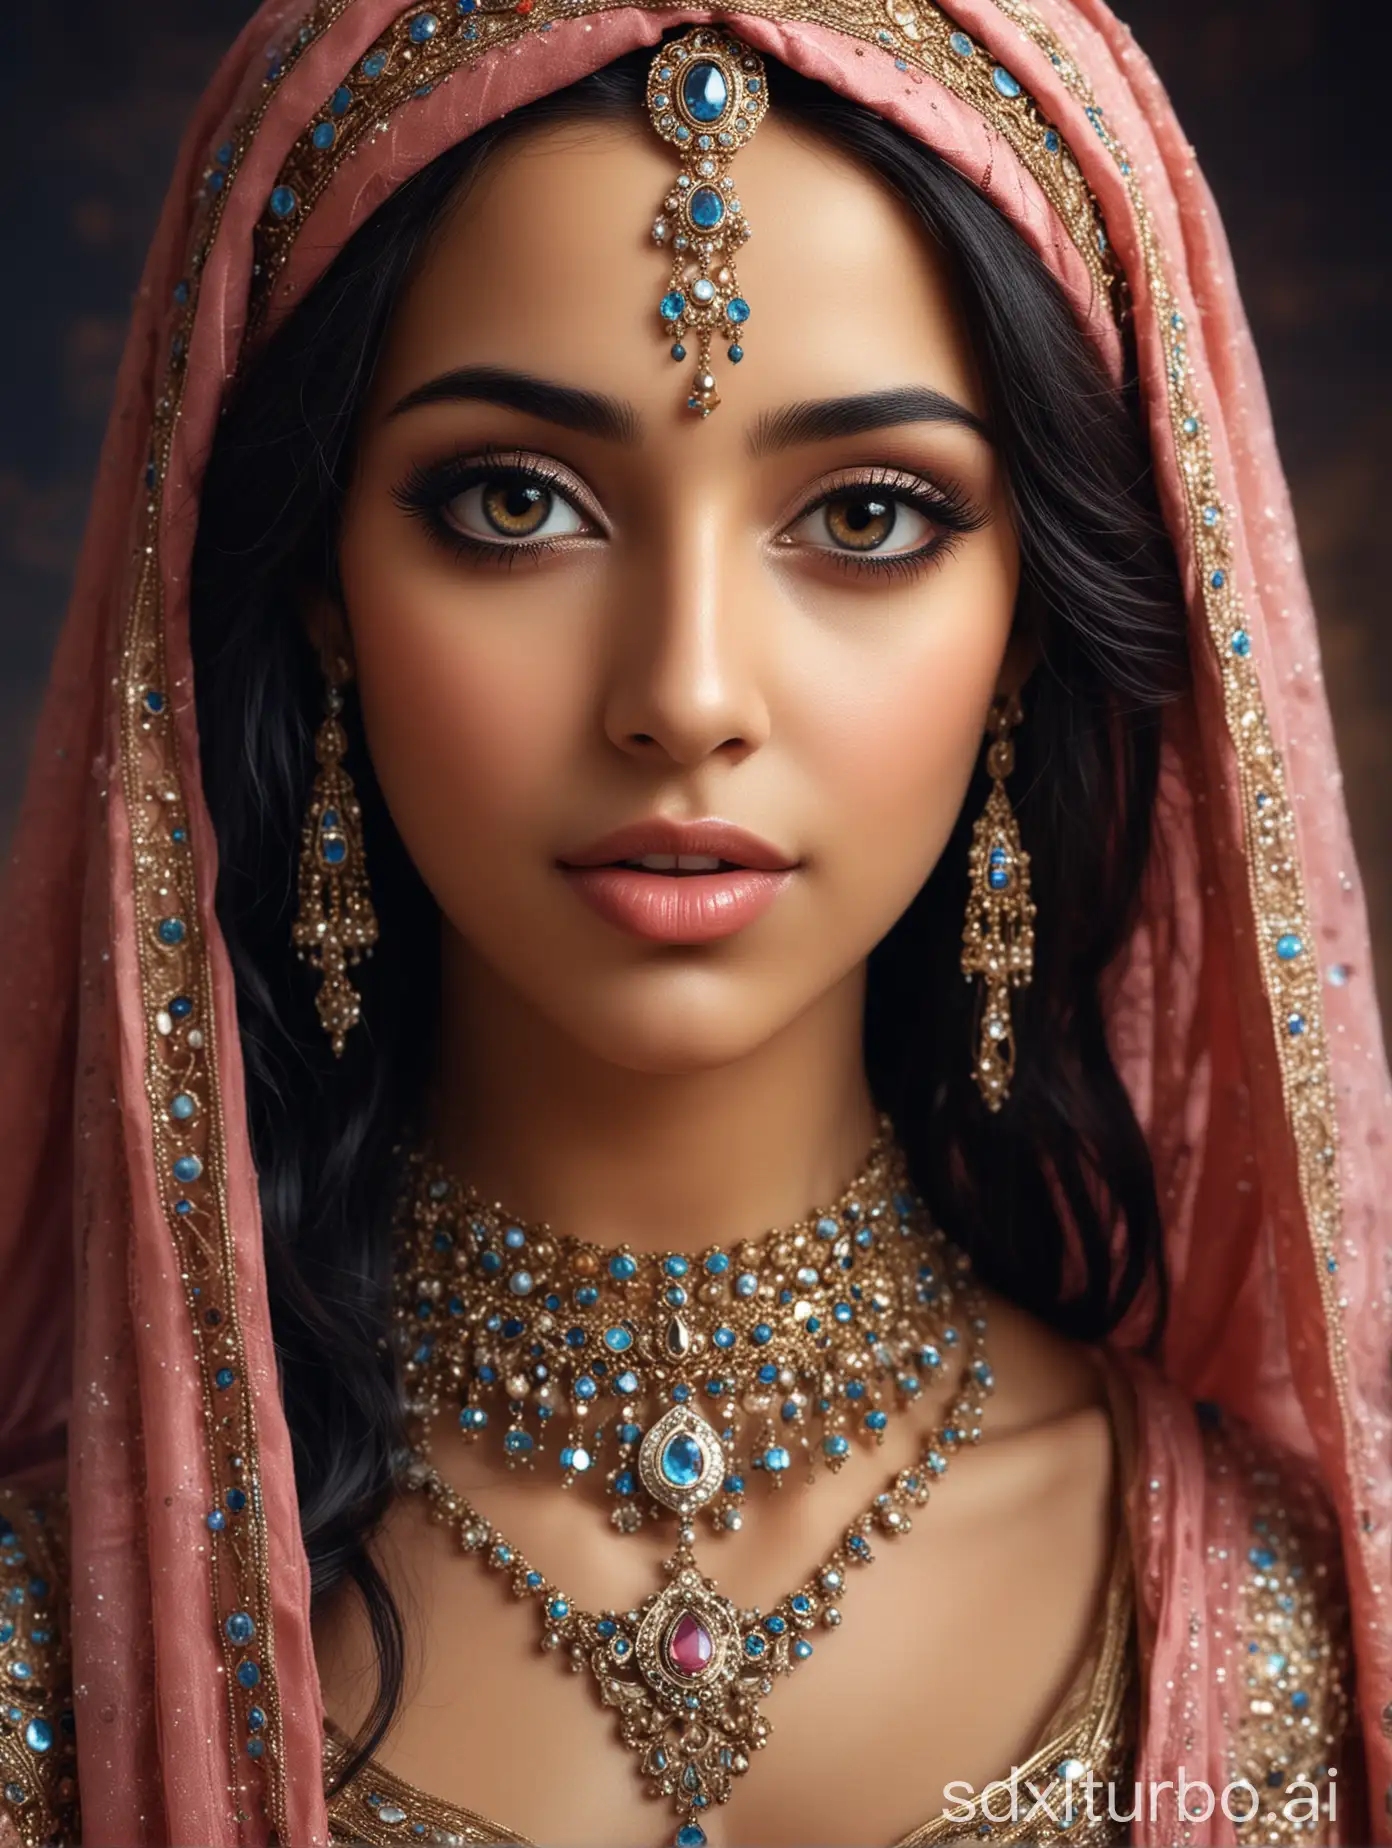 Dreamy-Portrait-of-an-Arabian-Princess-A-Thousand-and-One-Nights-Fantasy-Art